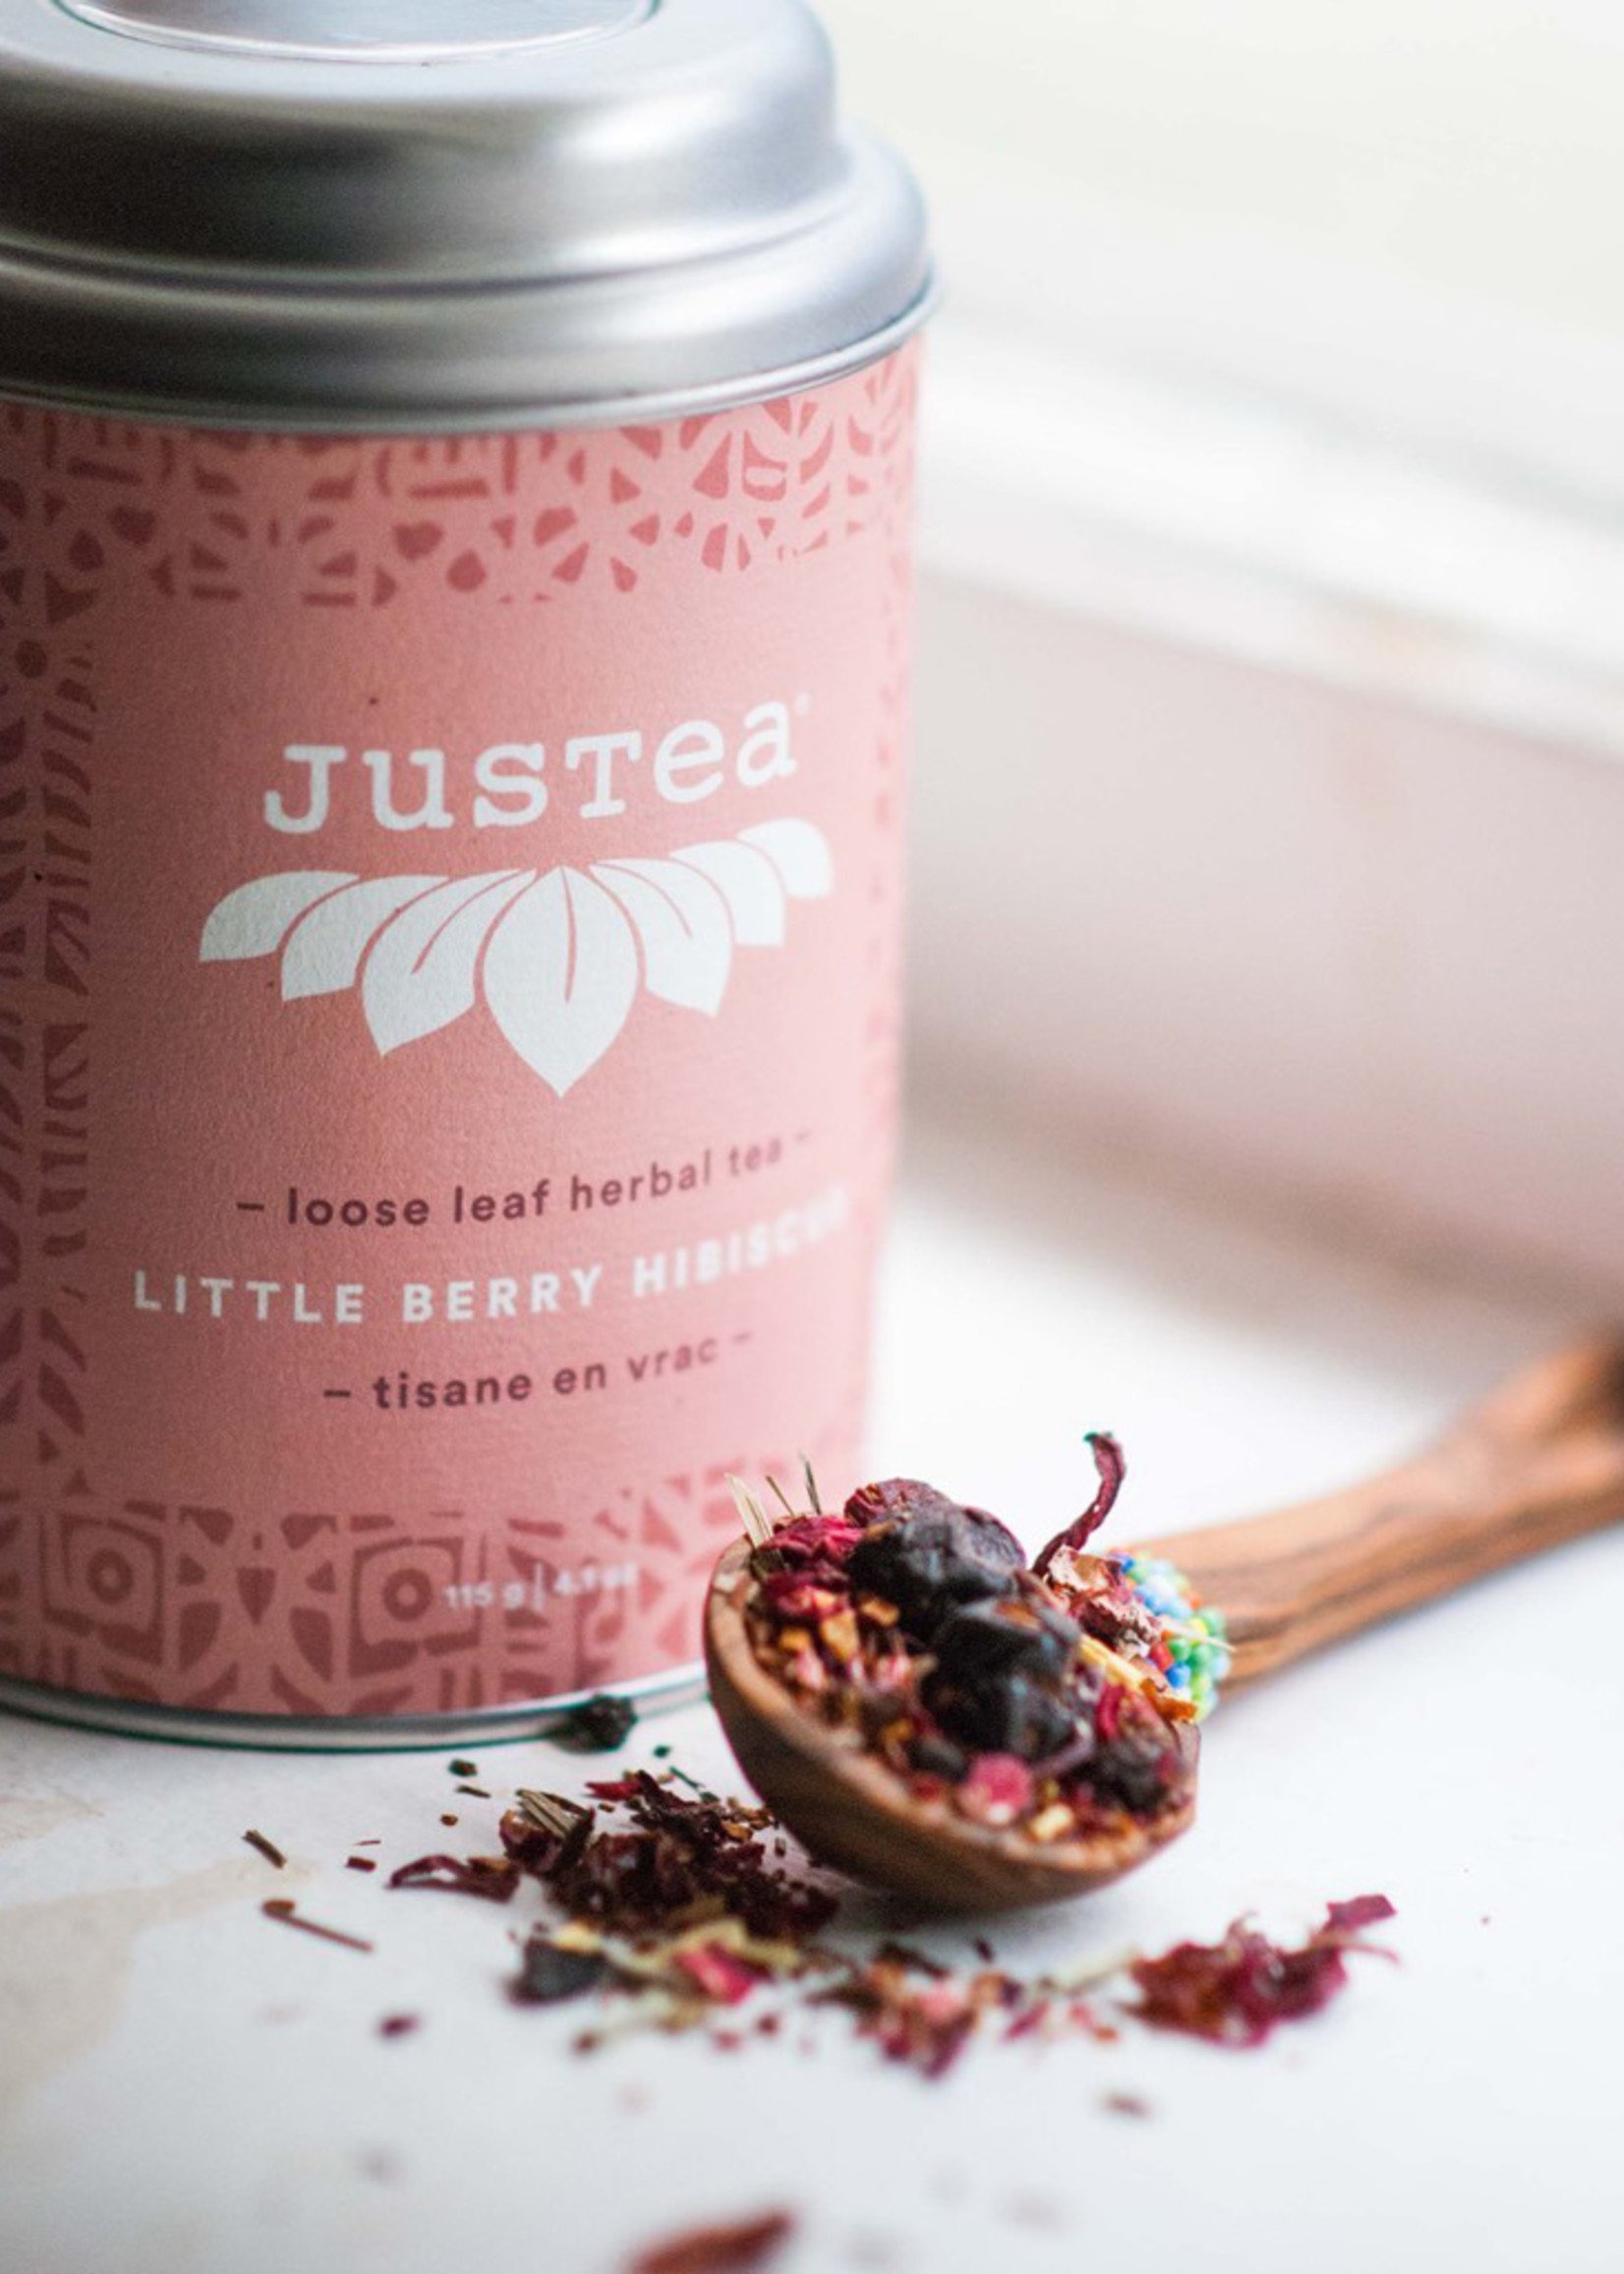 JusTea Loose Leaf Tea - Little Berry Hibiscus